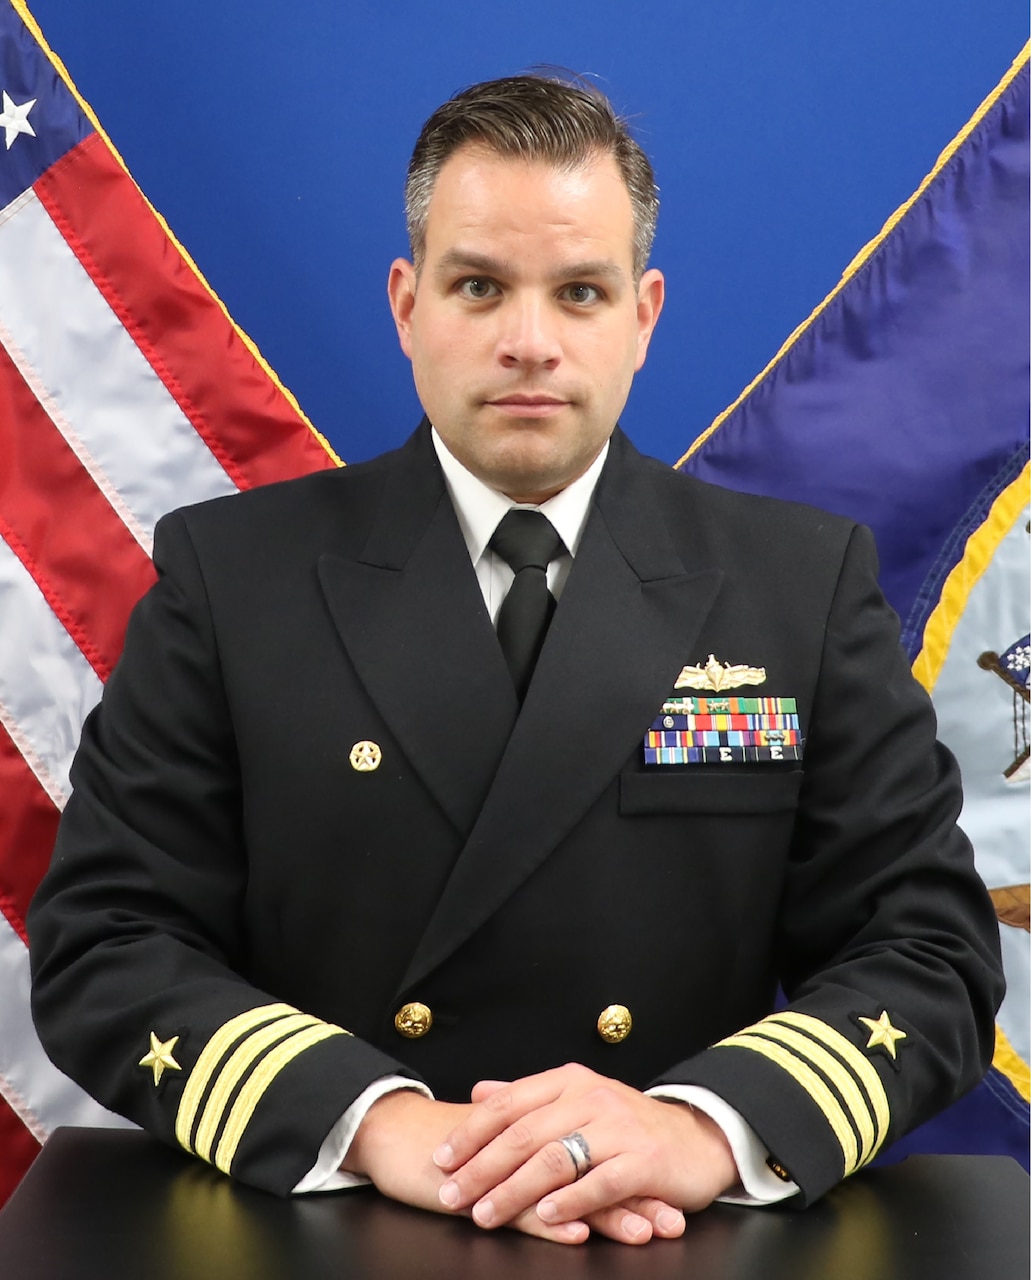 Commander Joseph Foster